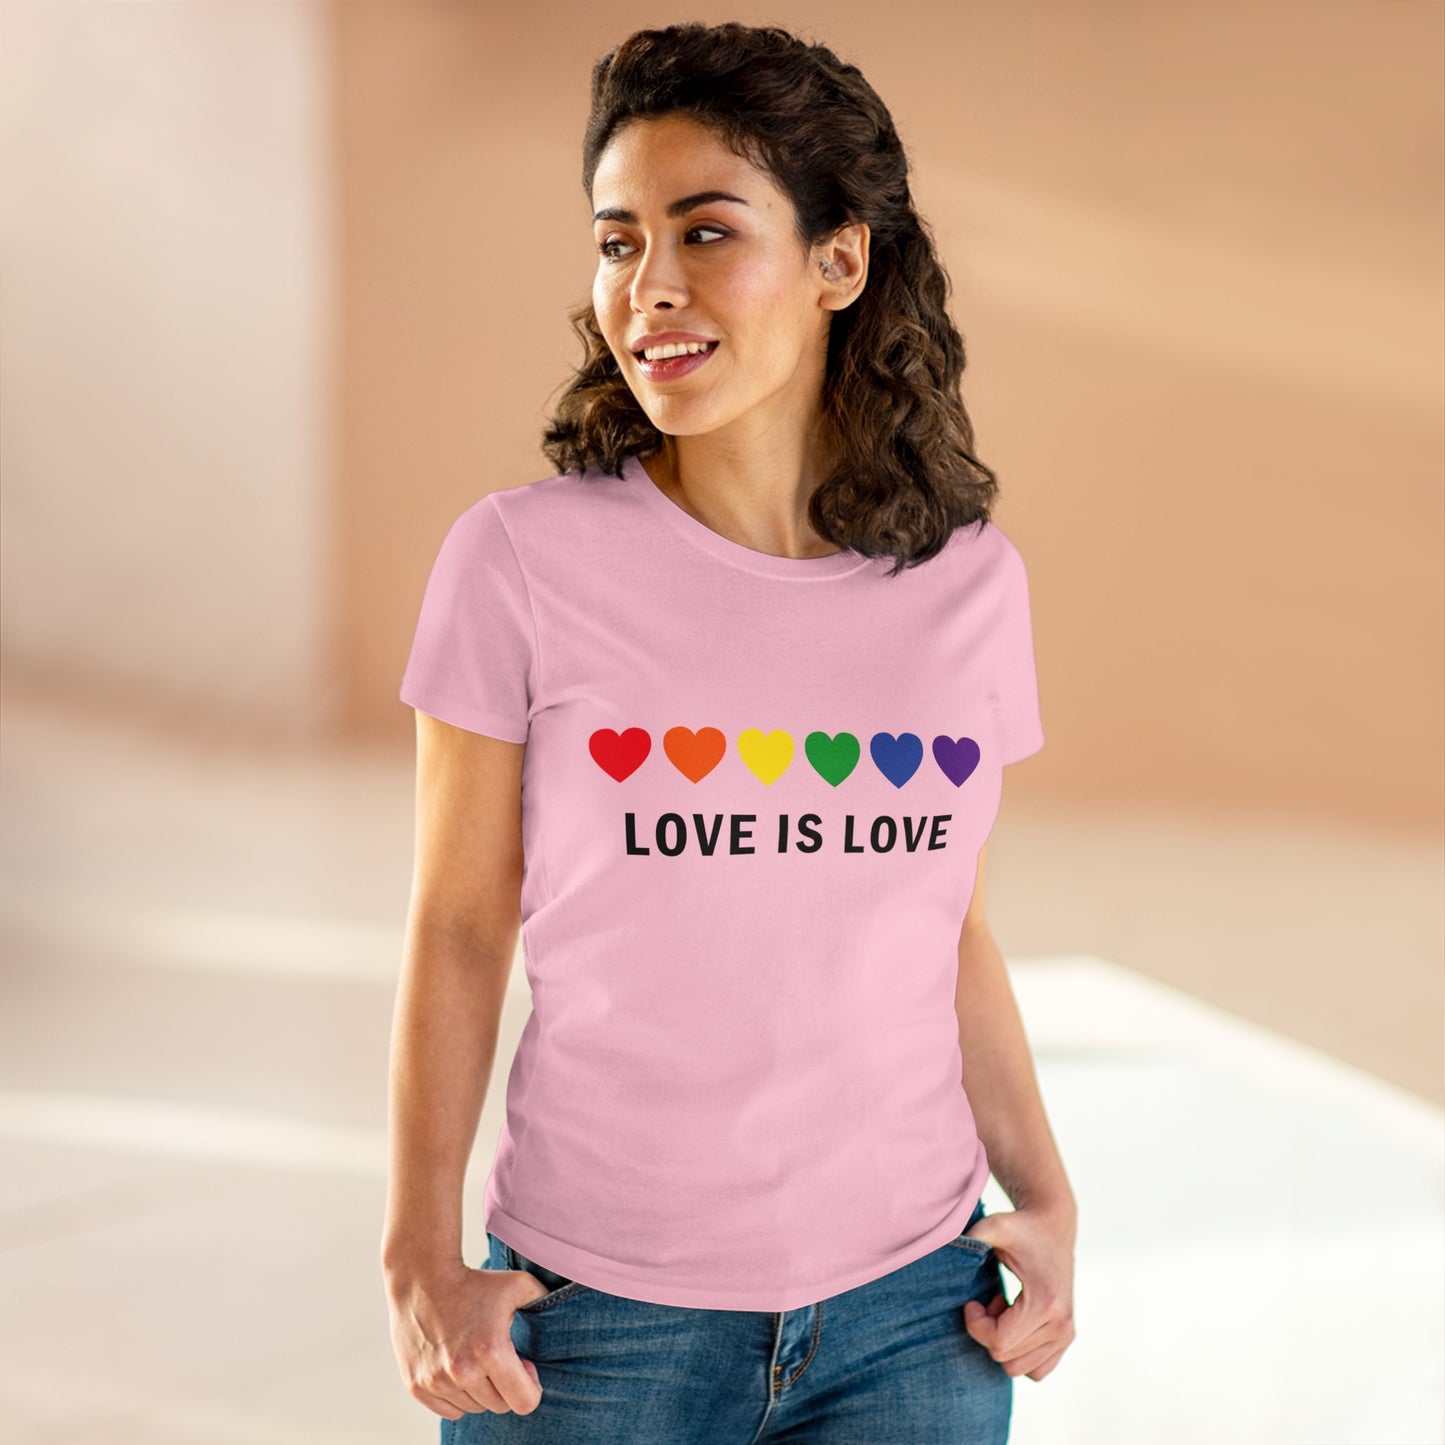 love is love shirt 6